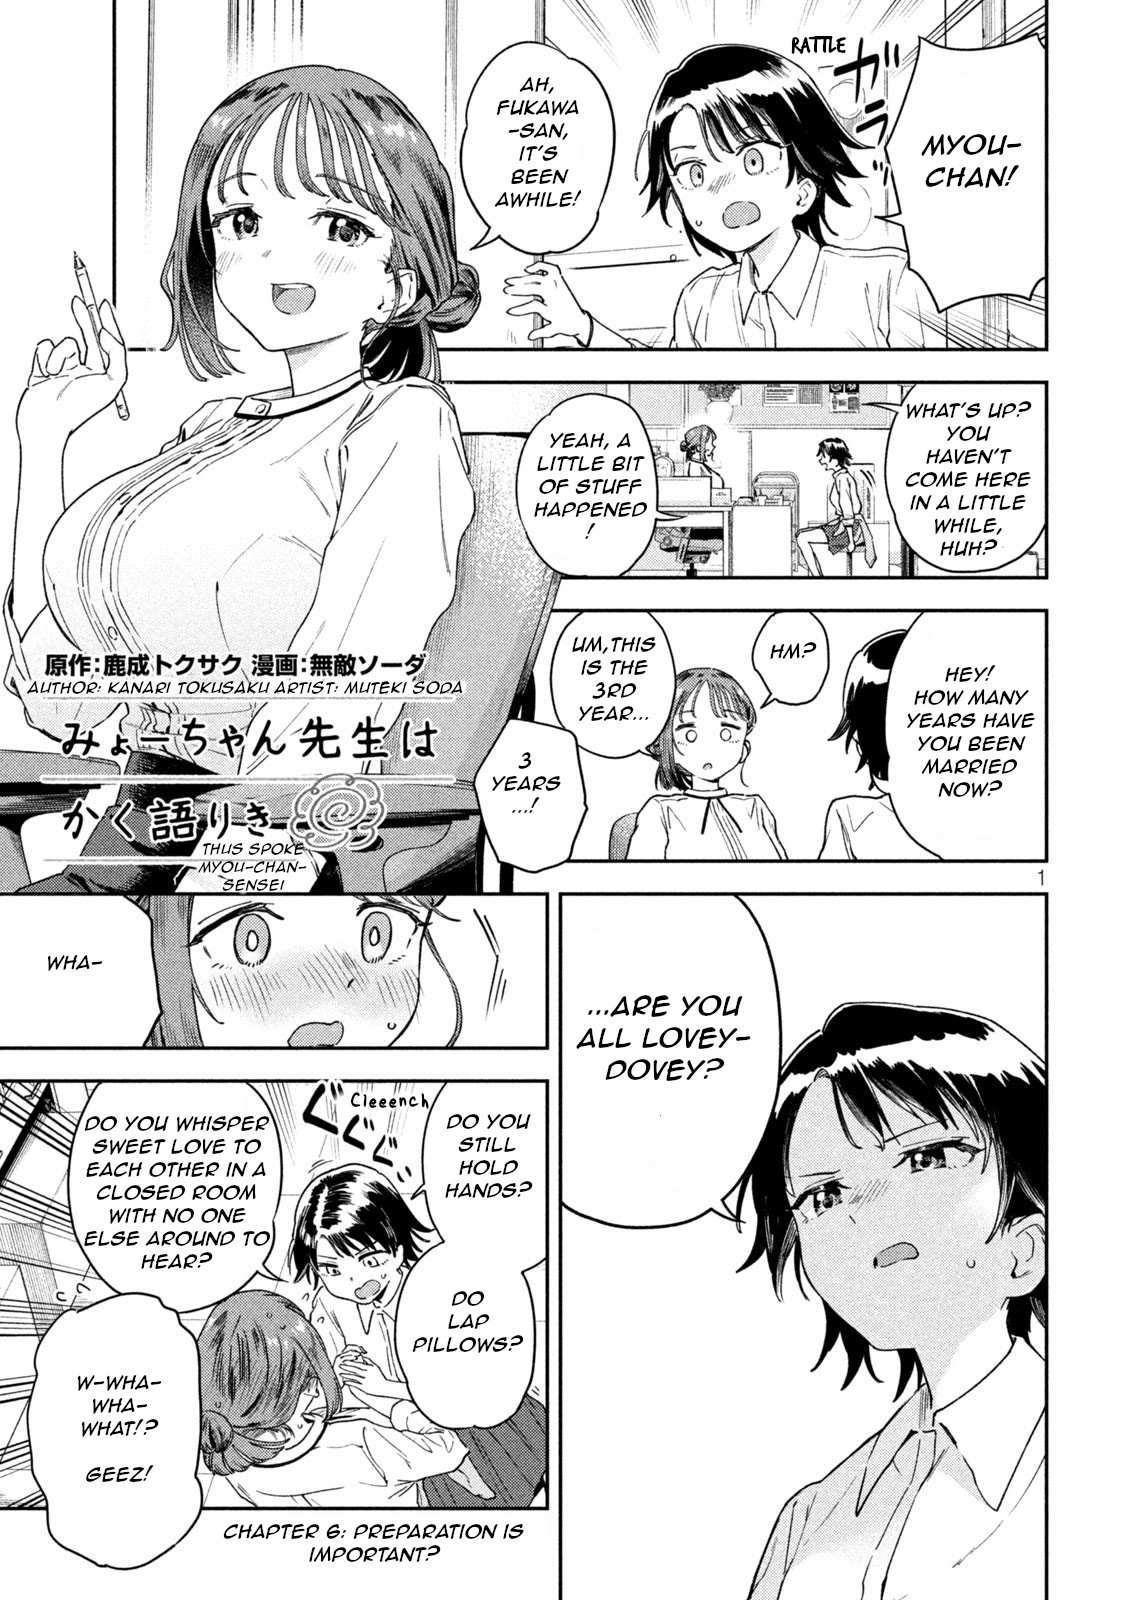 Miyo-Chan Sensei Said So - chapter 6 - #2